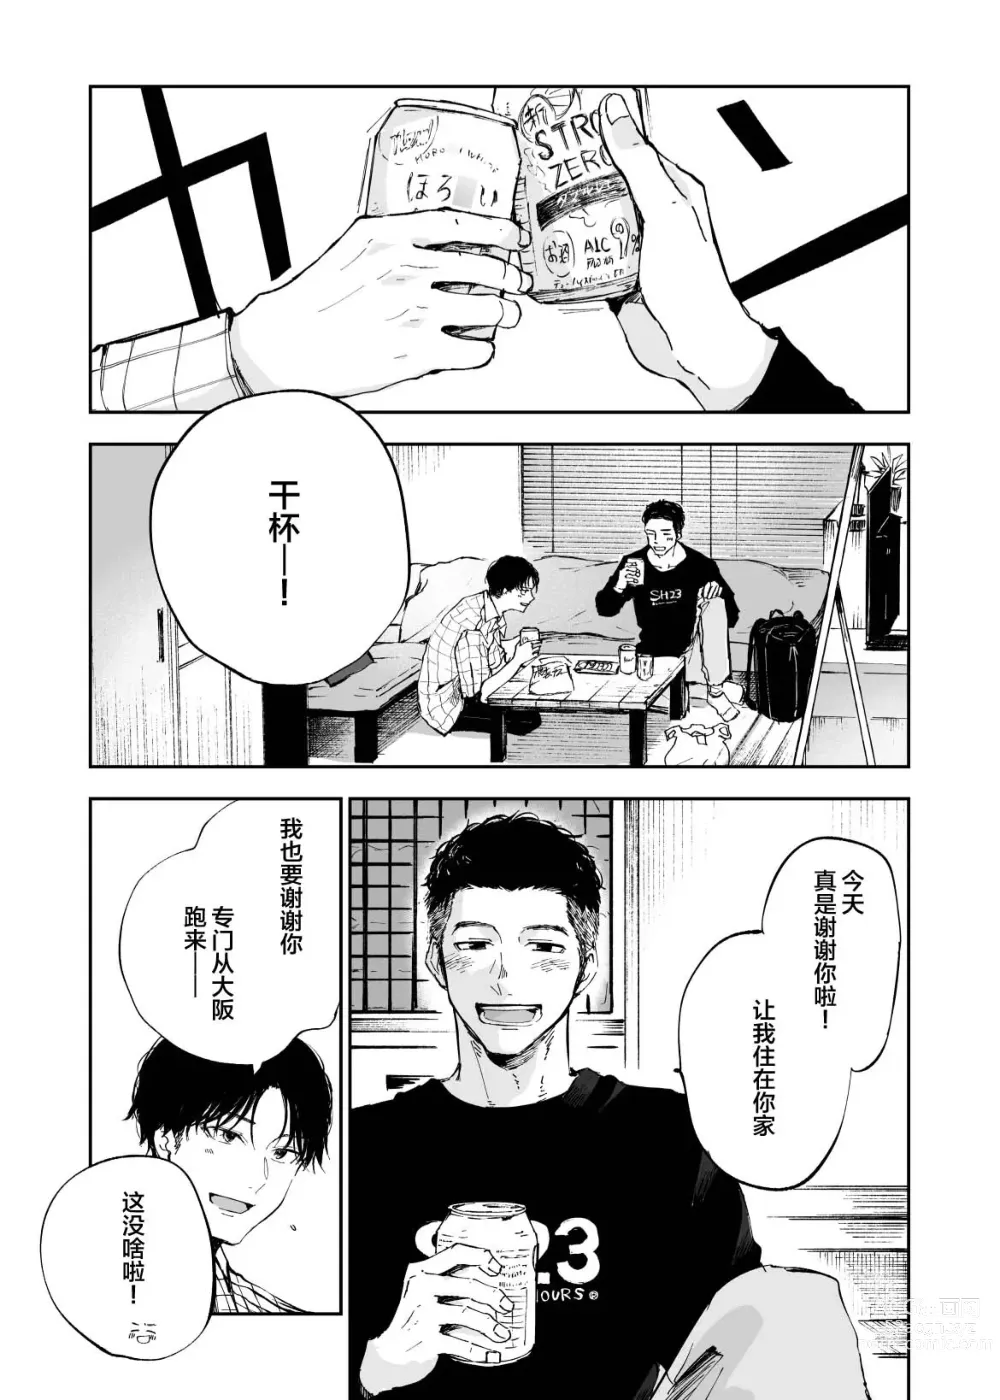 Page 3 of doujinshi Kimi wa Tomodachi